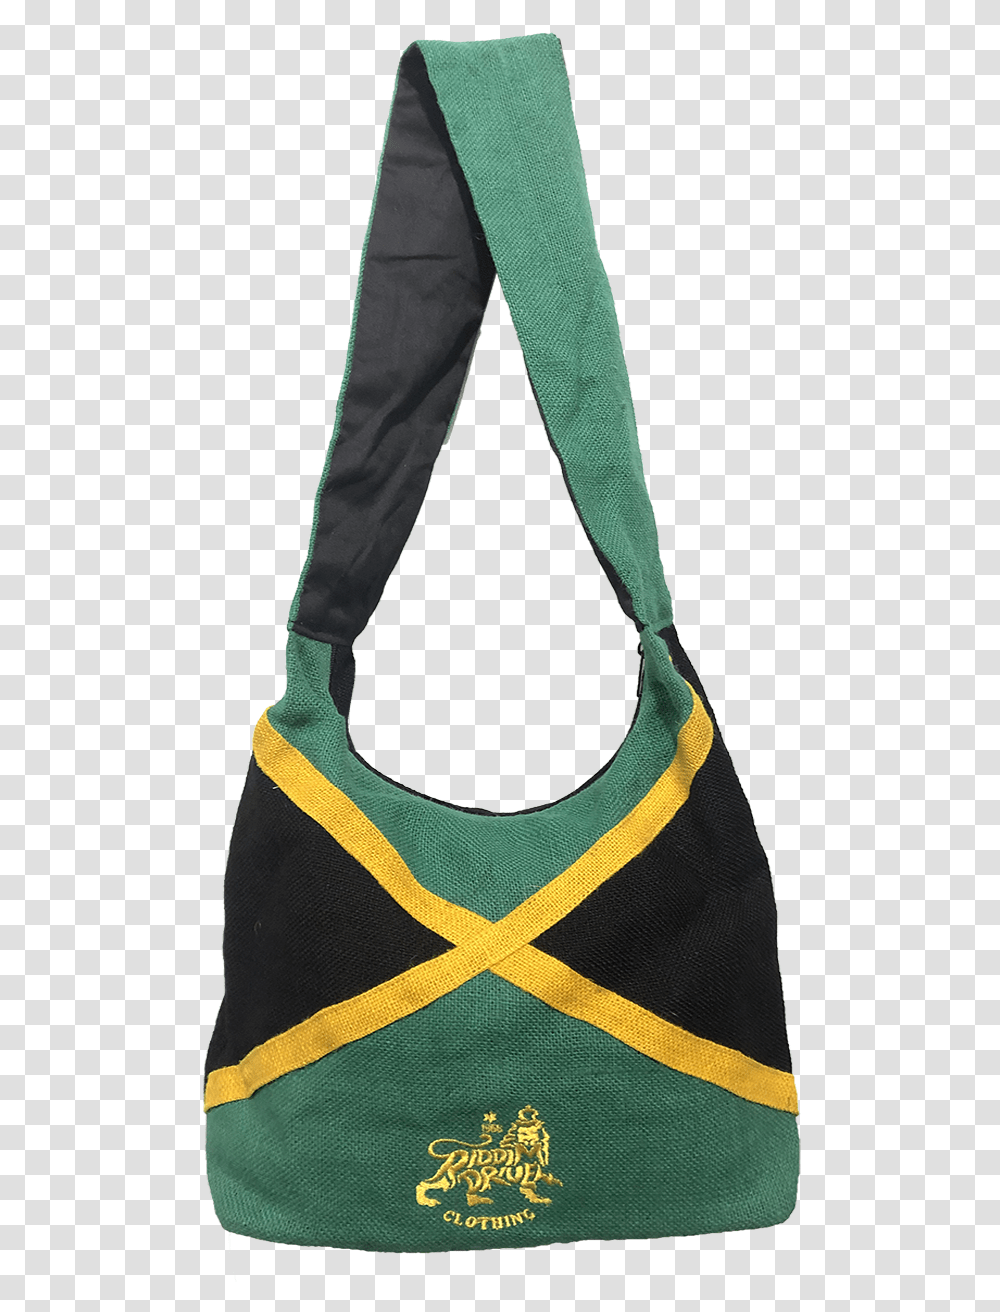 Jamaica Flag Bag Shoulder Shoulder Bag, Handbag, Accessories, Accessory, Purse Transparent Png